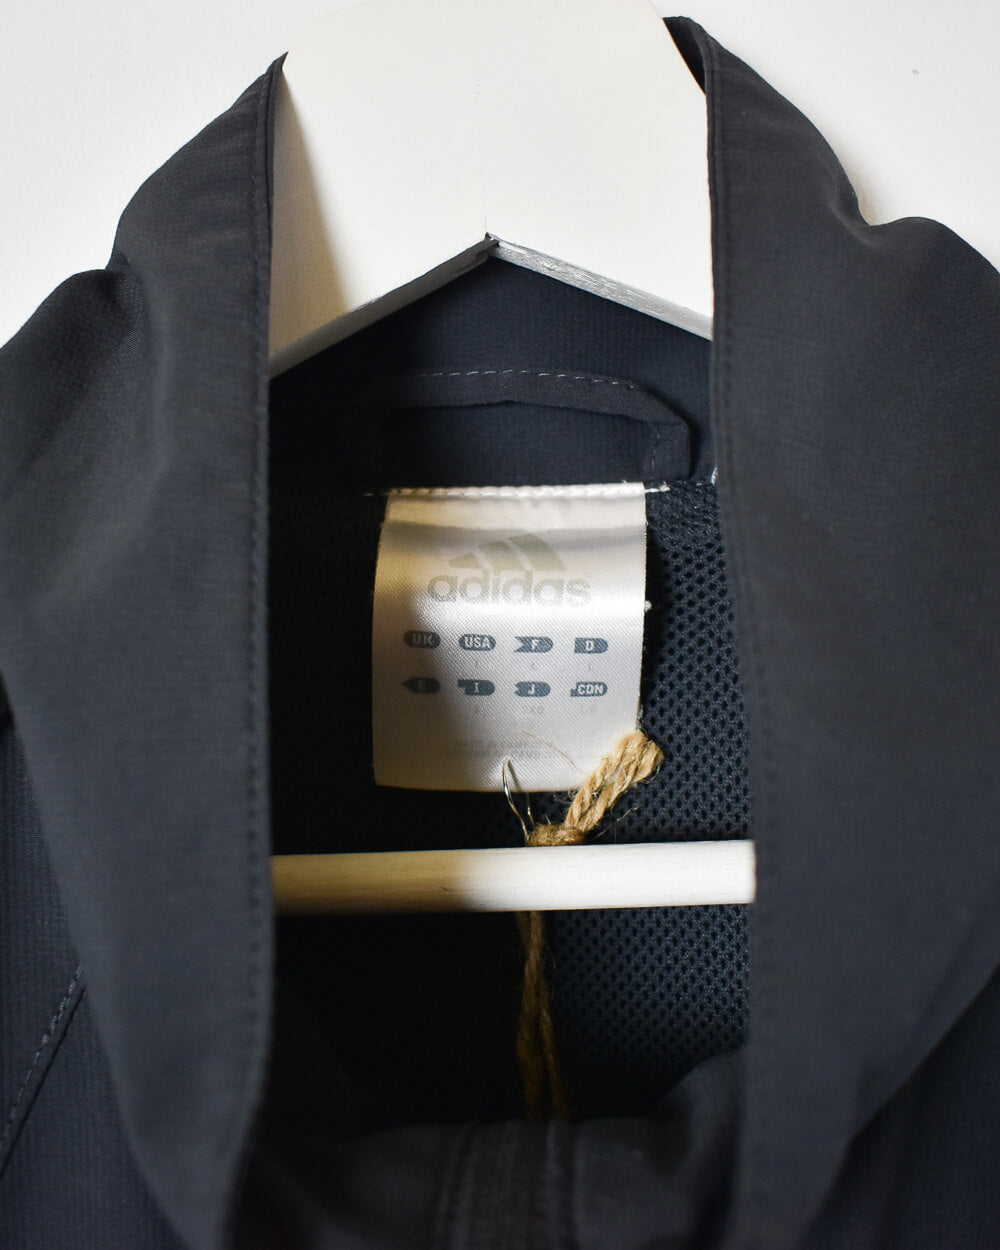 Black Adidas Windbreaker Jacket - Large